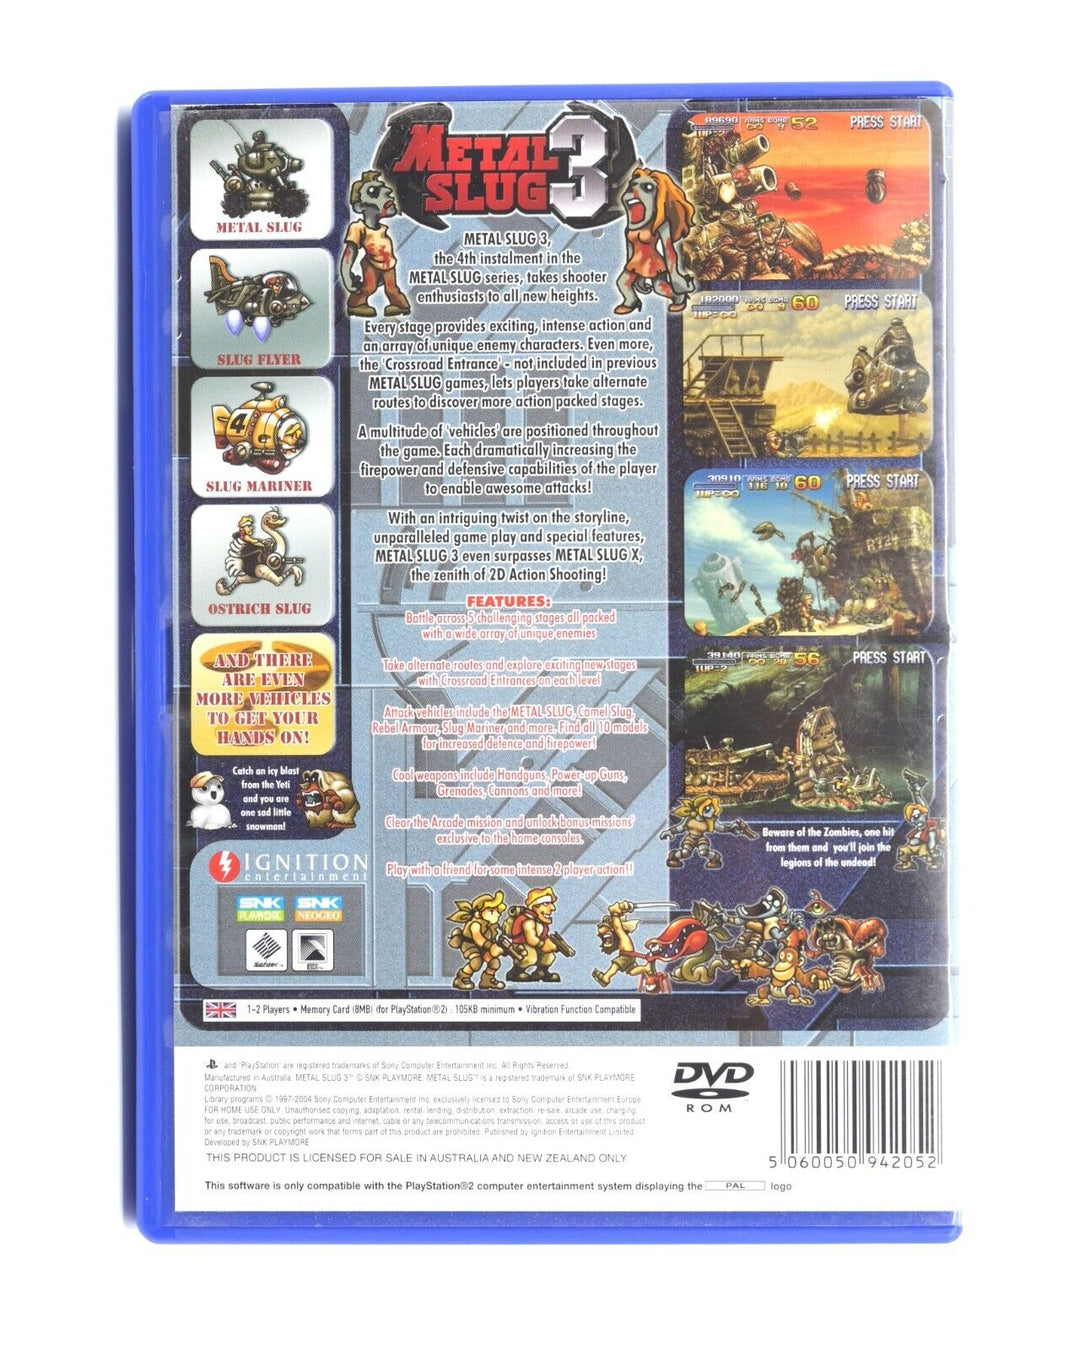 Metal Slug 3 #2 - Sony Playstation 2 / PS2 Game - PAL - FREE POST!